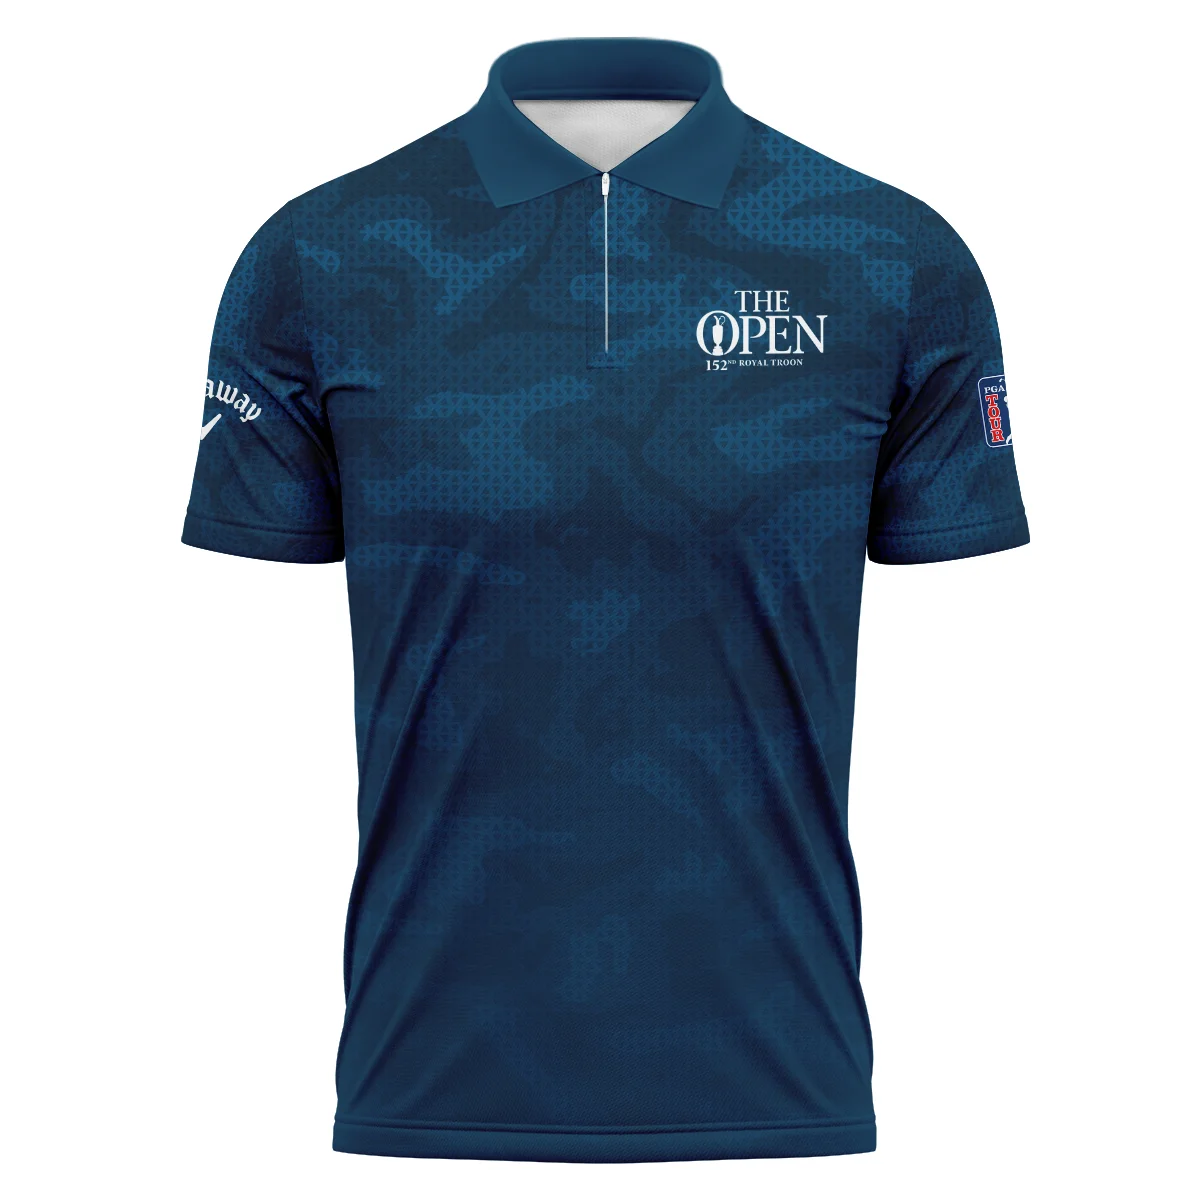 Callaway 152nd Open Championship Dark Blue Abstract Background Zipper Hoodie Shirt All Over Prints HOTOP260624A02CLWZHD